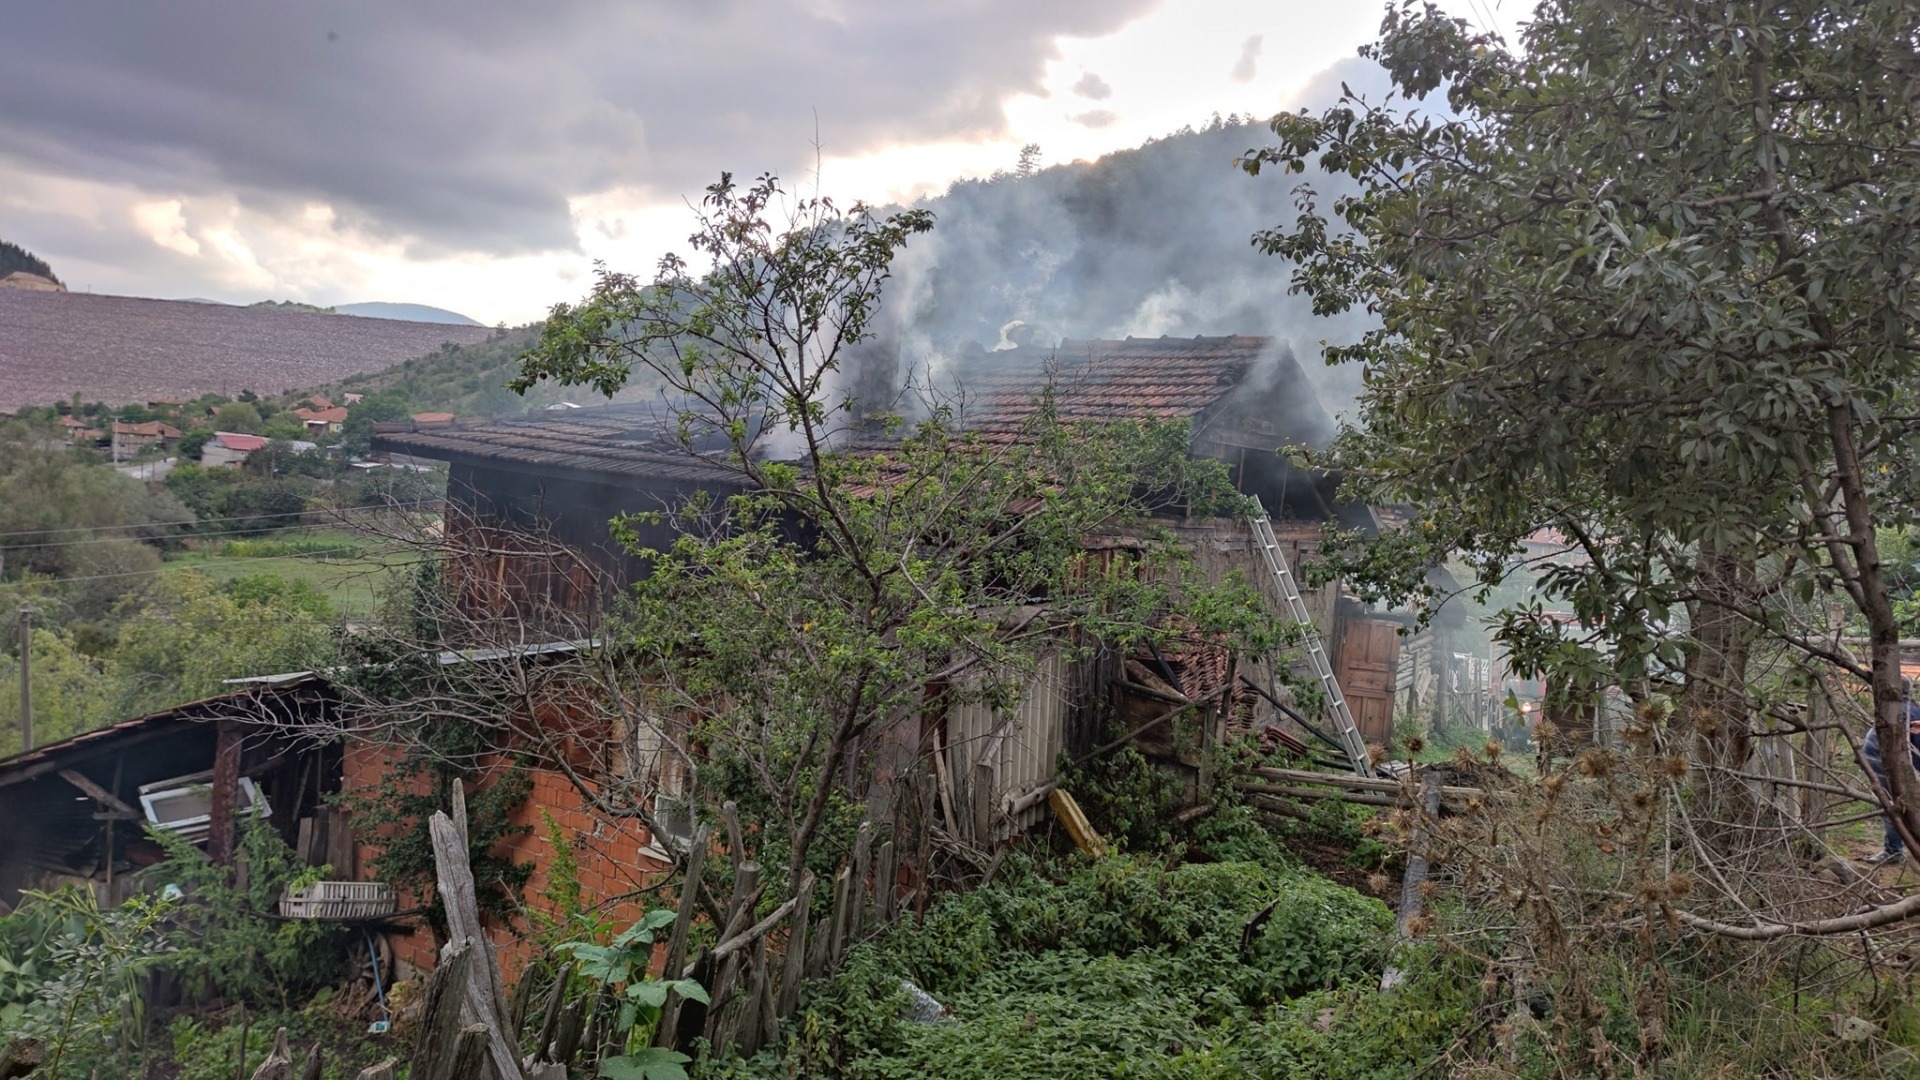 Bolu’da iki katlı ahşap ev alev alev yandı